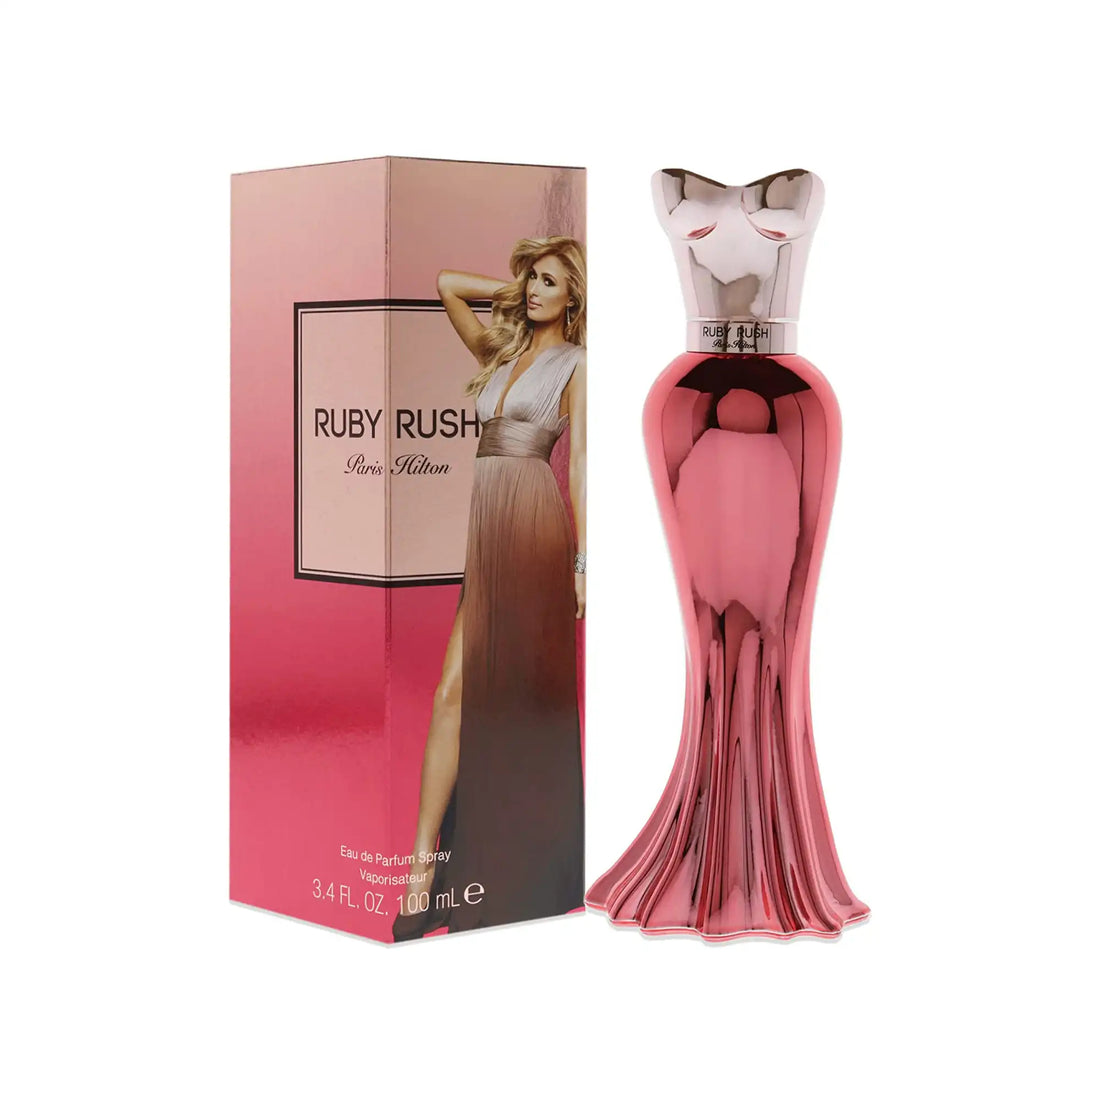 Paris Hilton Ruby Rush Woman Eau de Parfum Spray 100ml Packaging